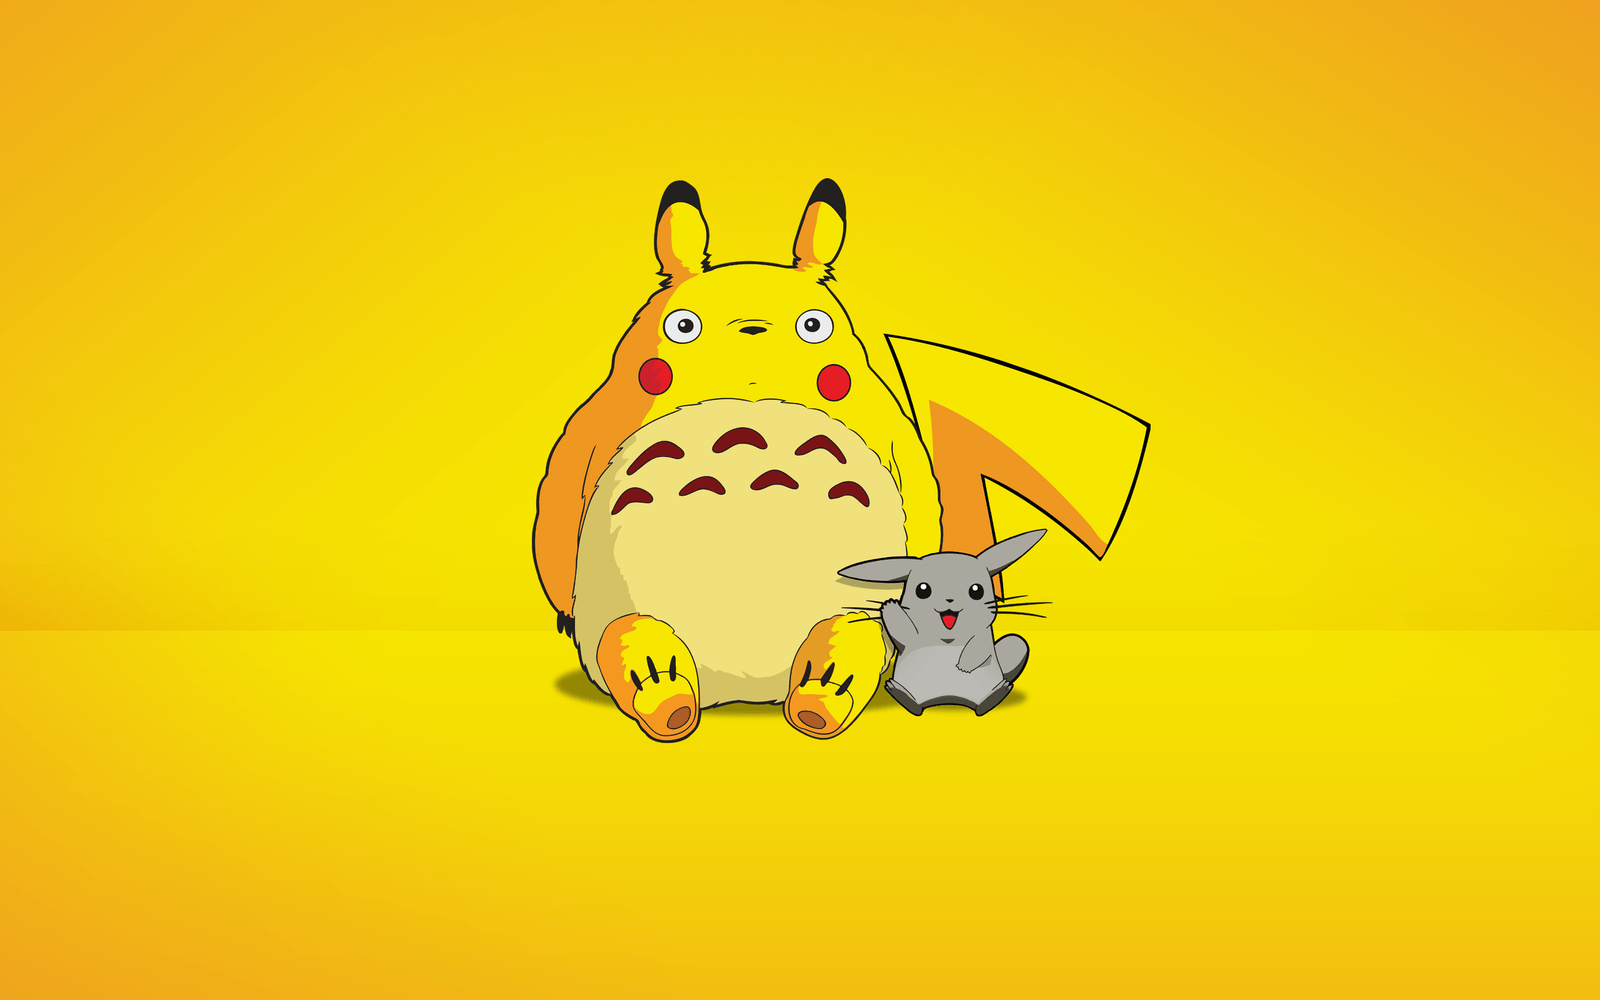 Pikachu Totoro Wallpapers